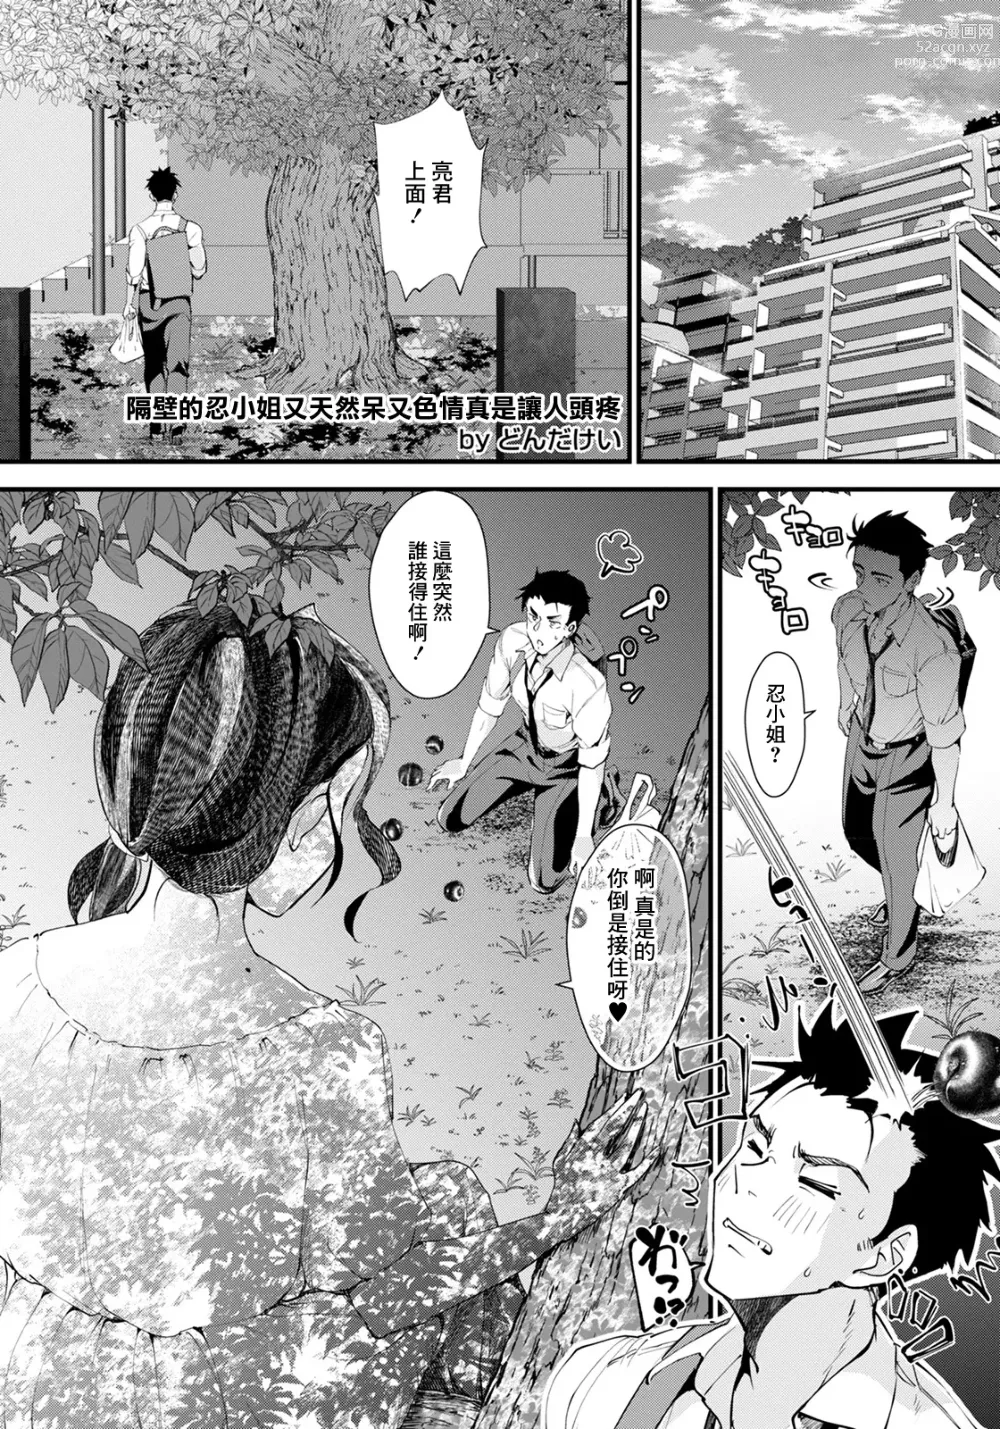 Page 1 of manga 隔壁的忍小姐又天然呆又色情真是讓人頭疼